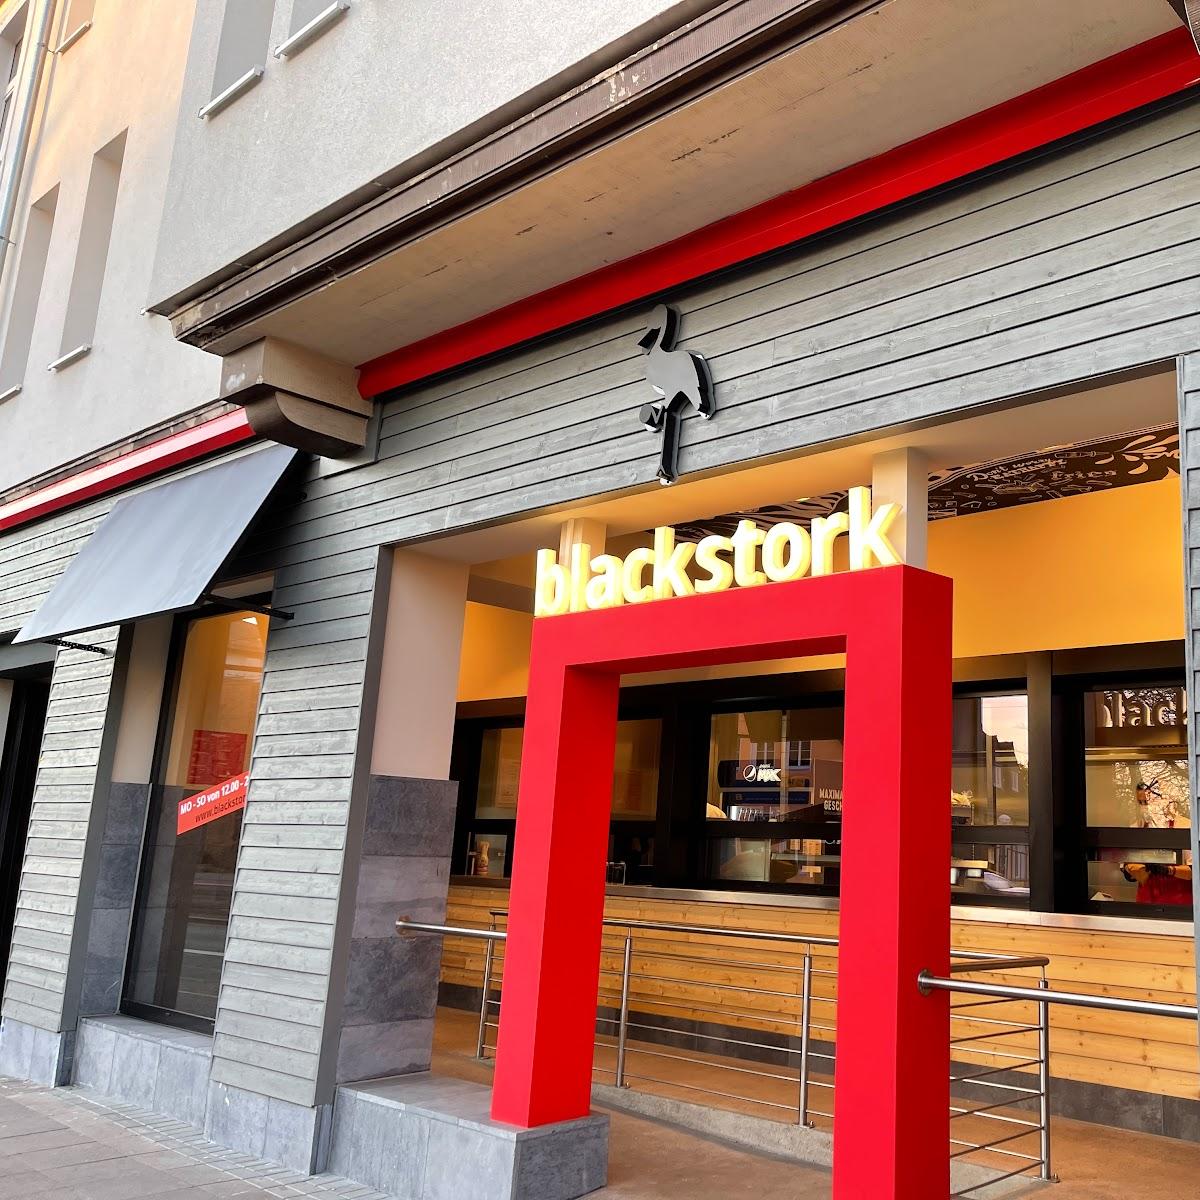 Restaurant "Blackstork" in Hannover